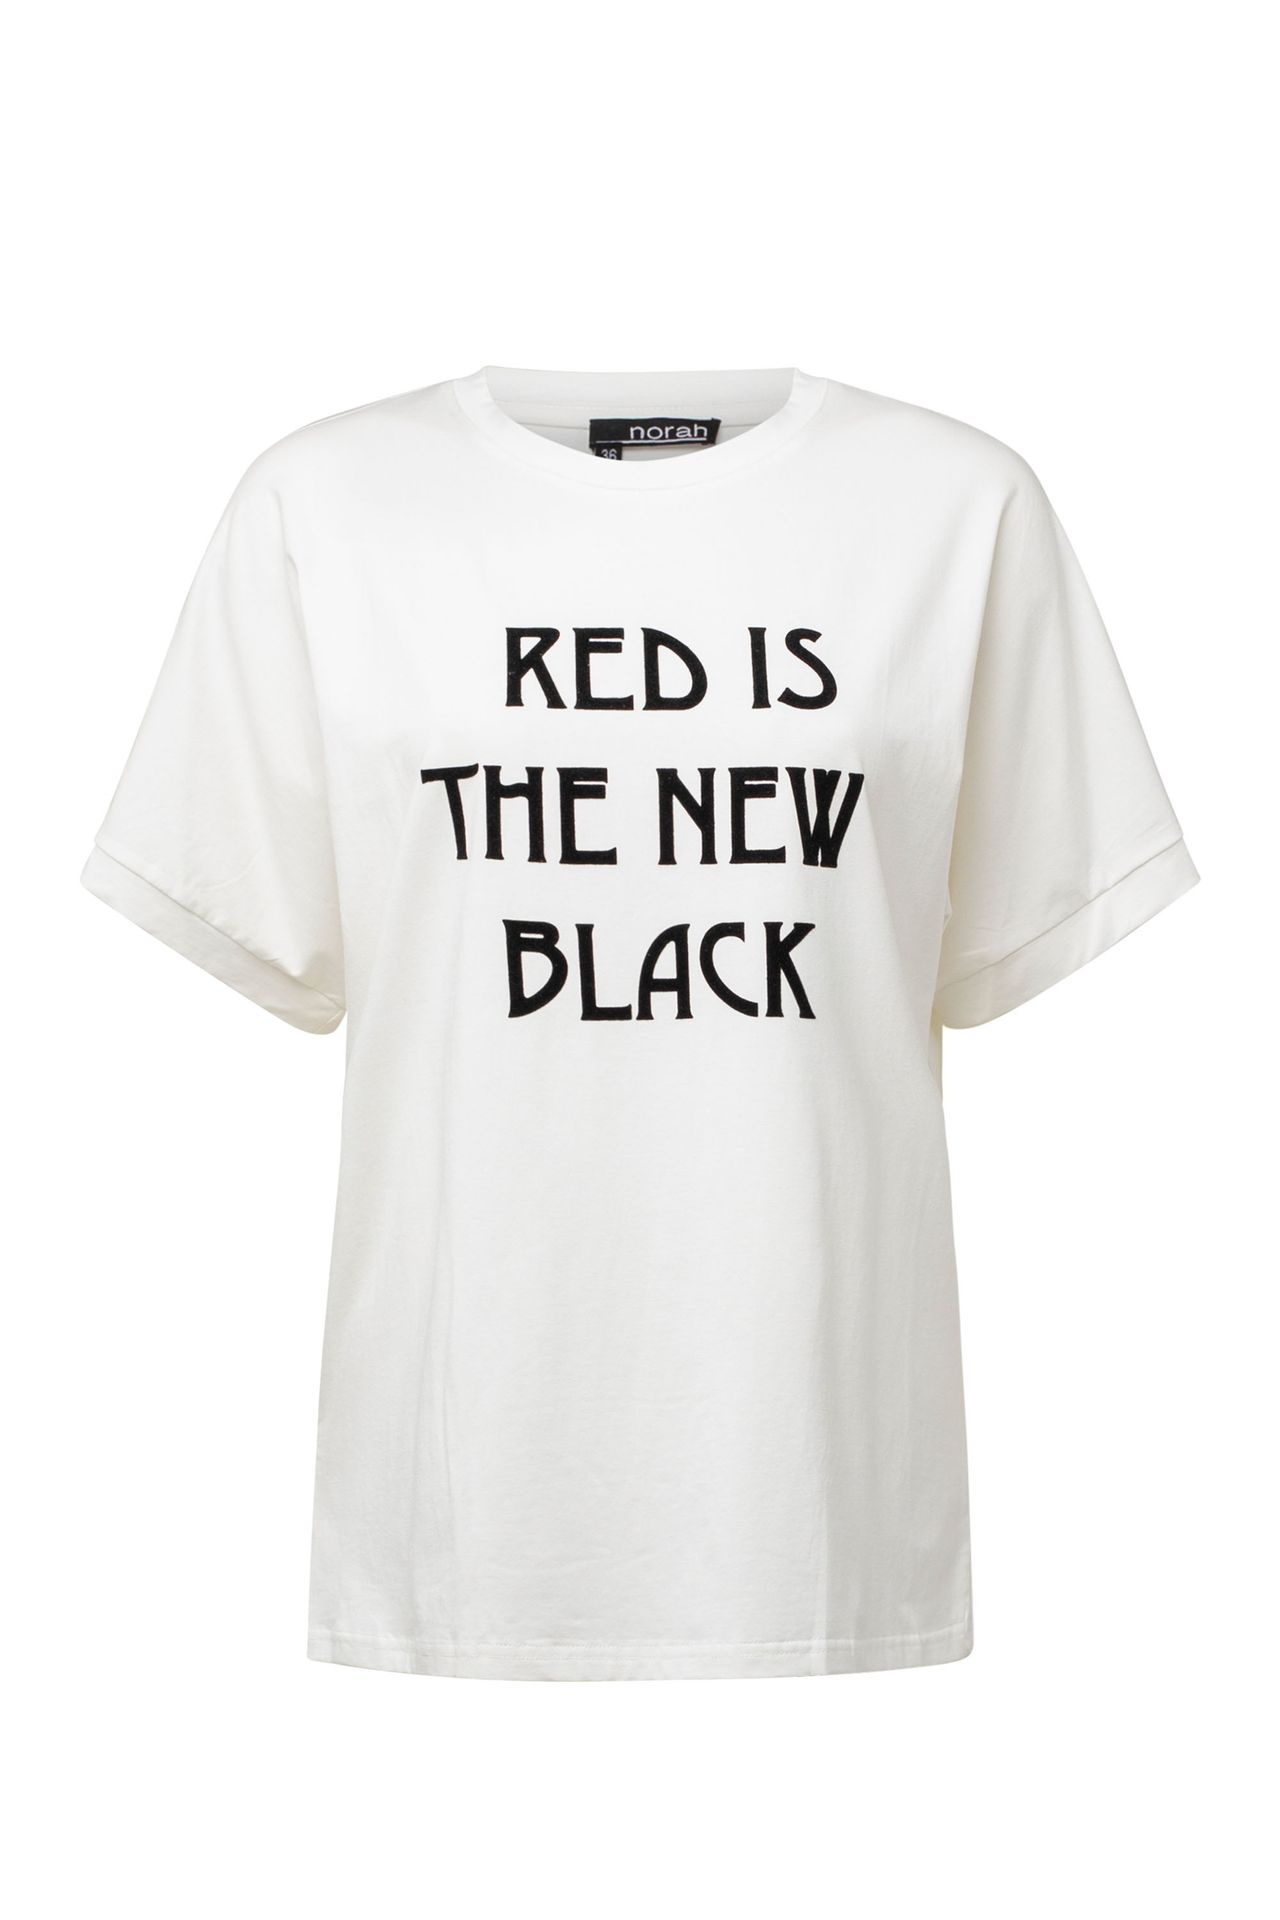 Norah Shirt gebroken wit off-white 213249-101